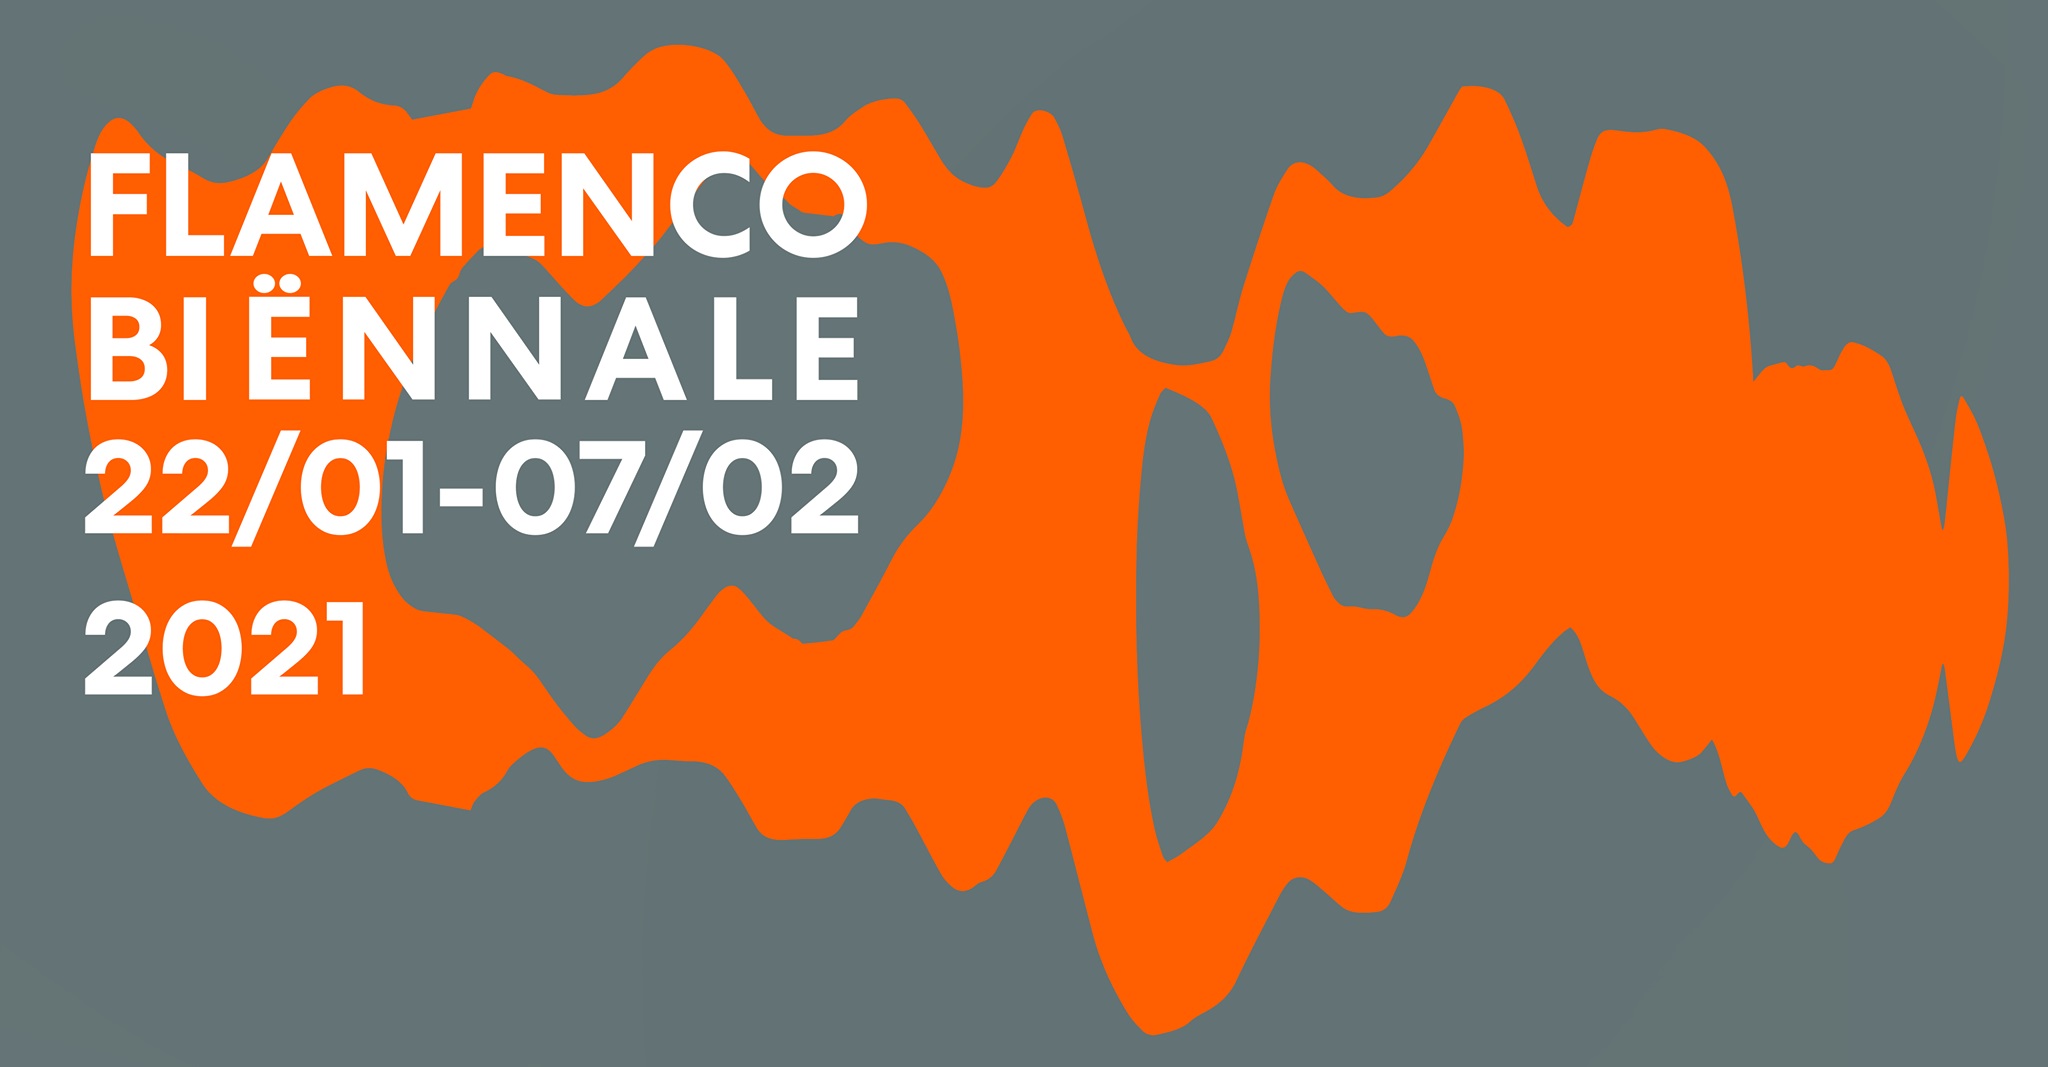 Flamenco Biennale 2021